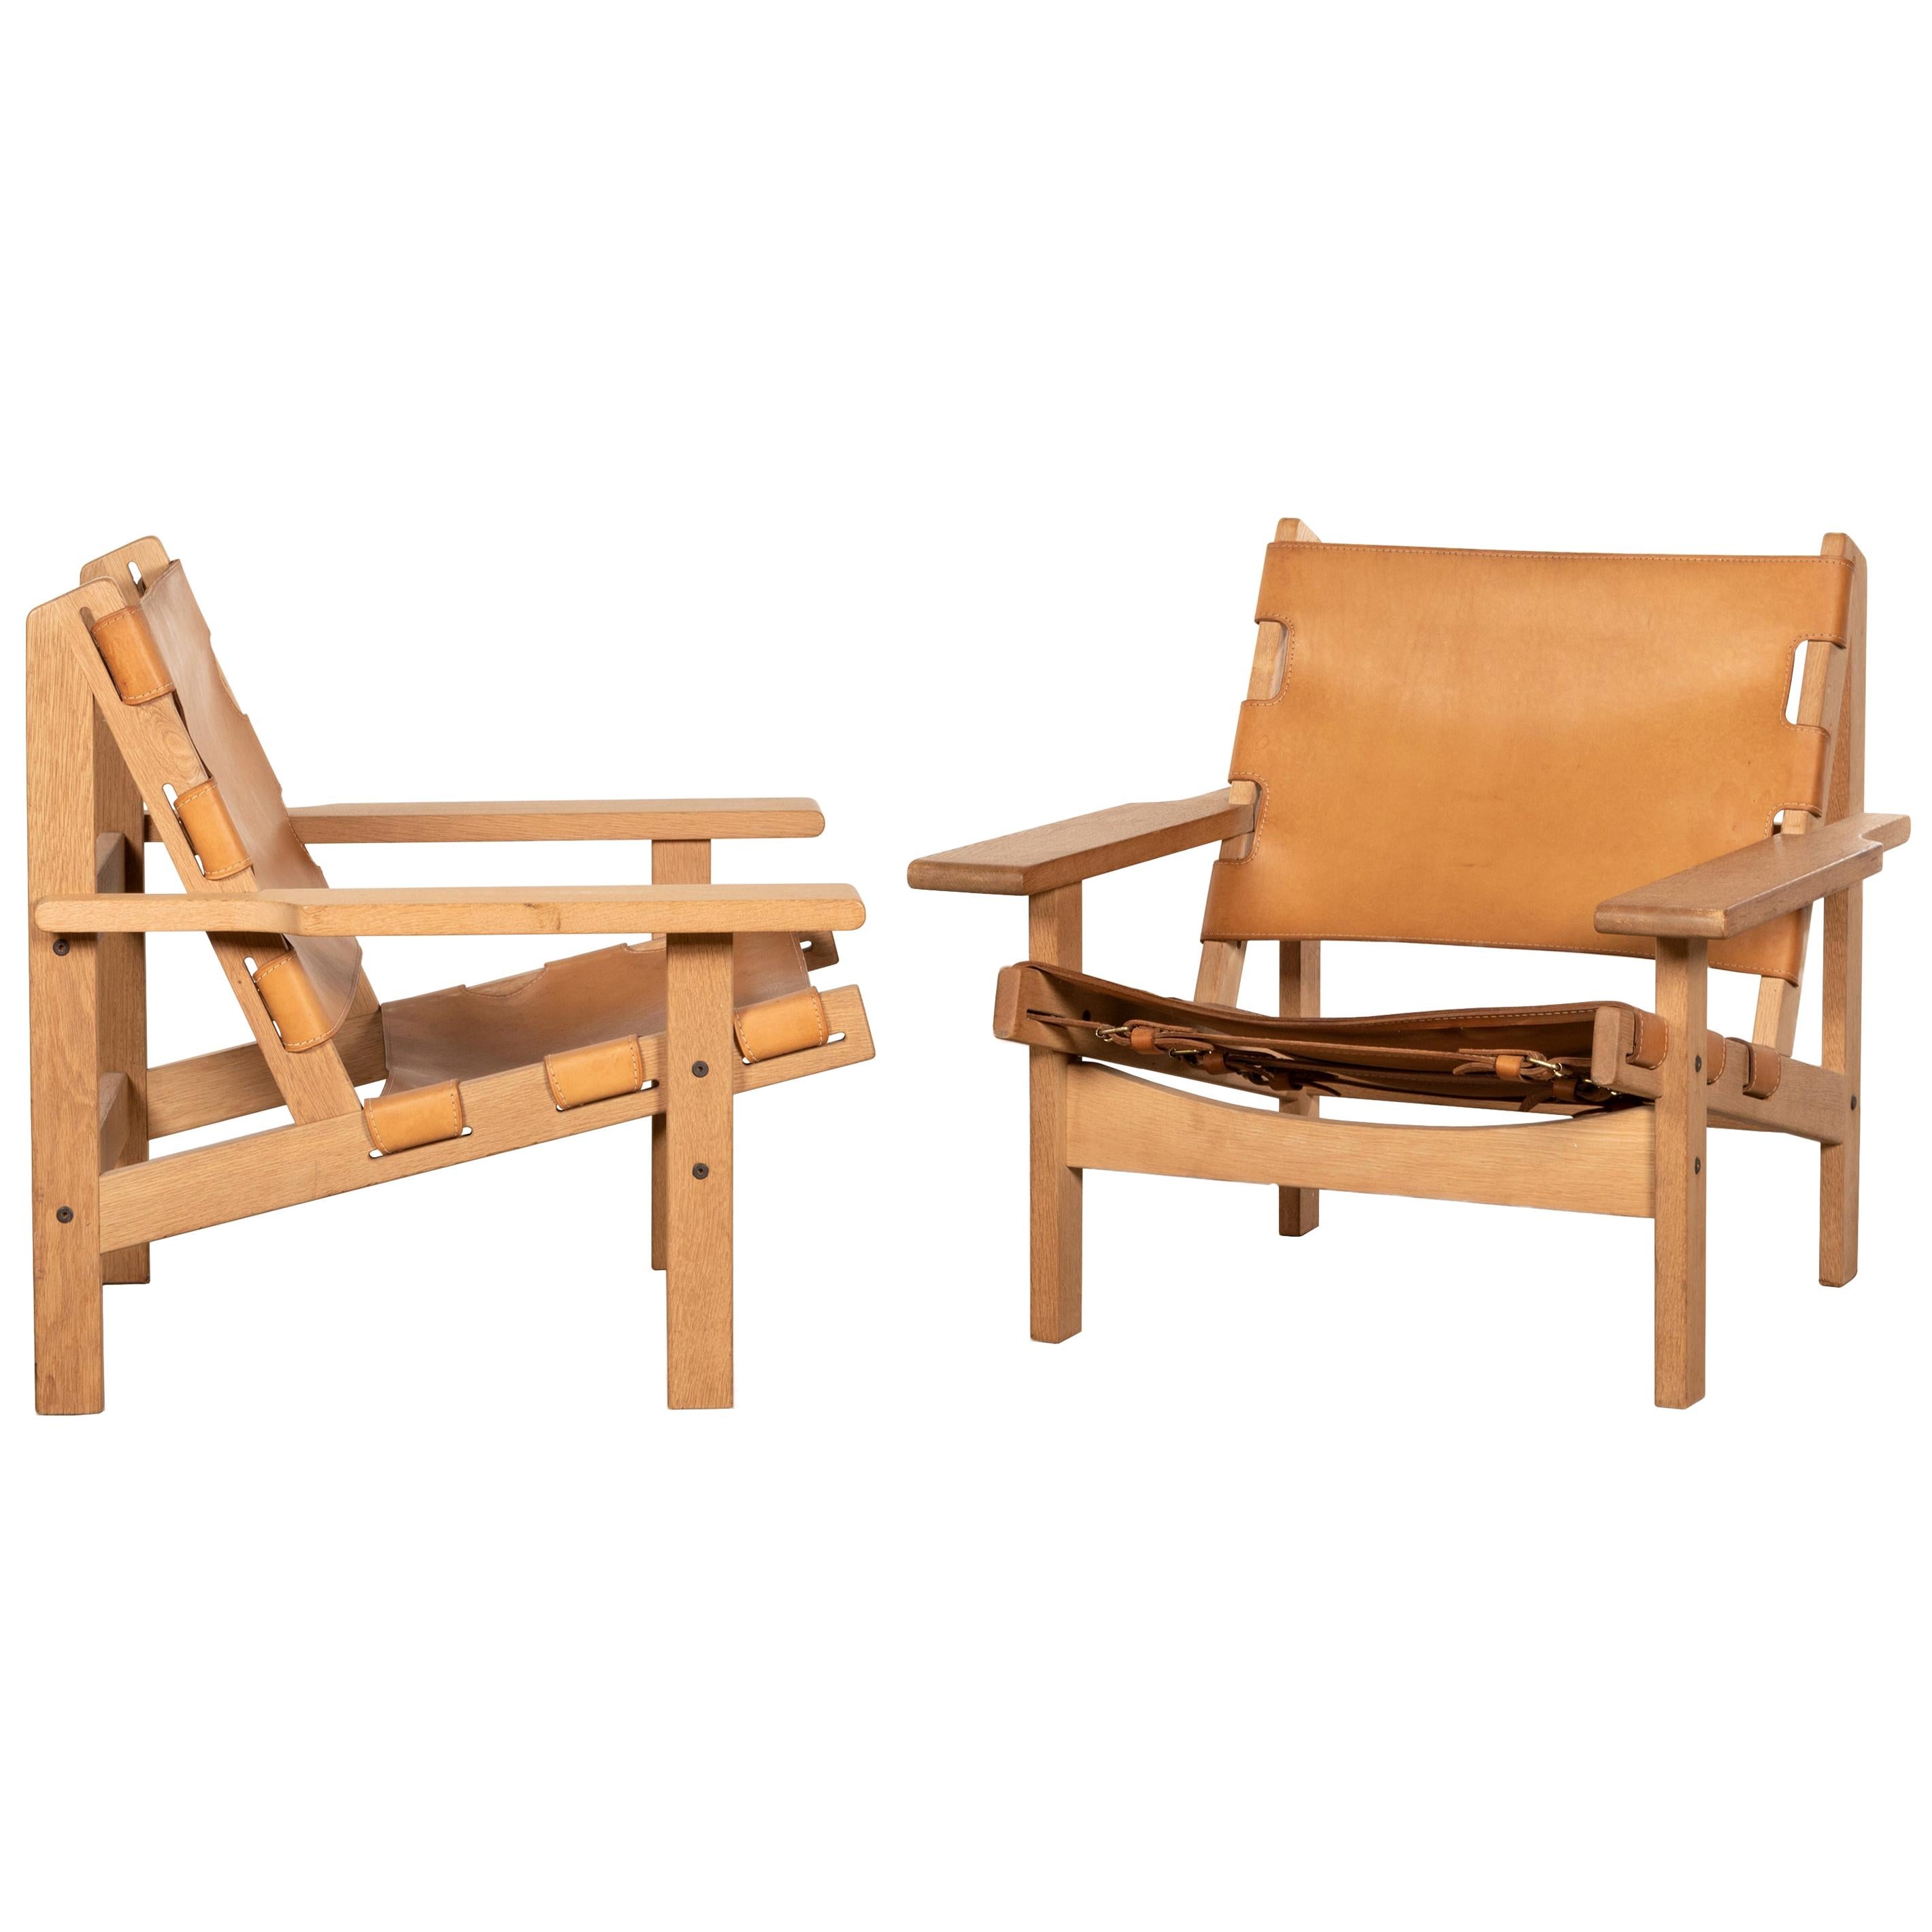 Kurt Østervig Hunting Chairs in Cognac Leather for K. P. Jørgensens Møbelfabrik